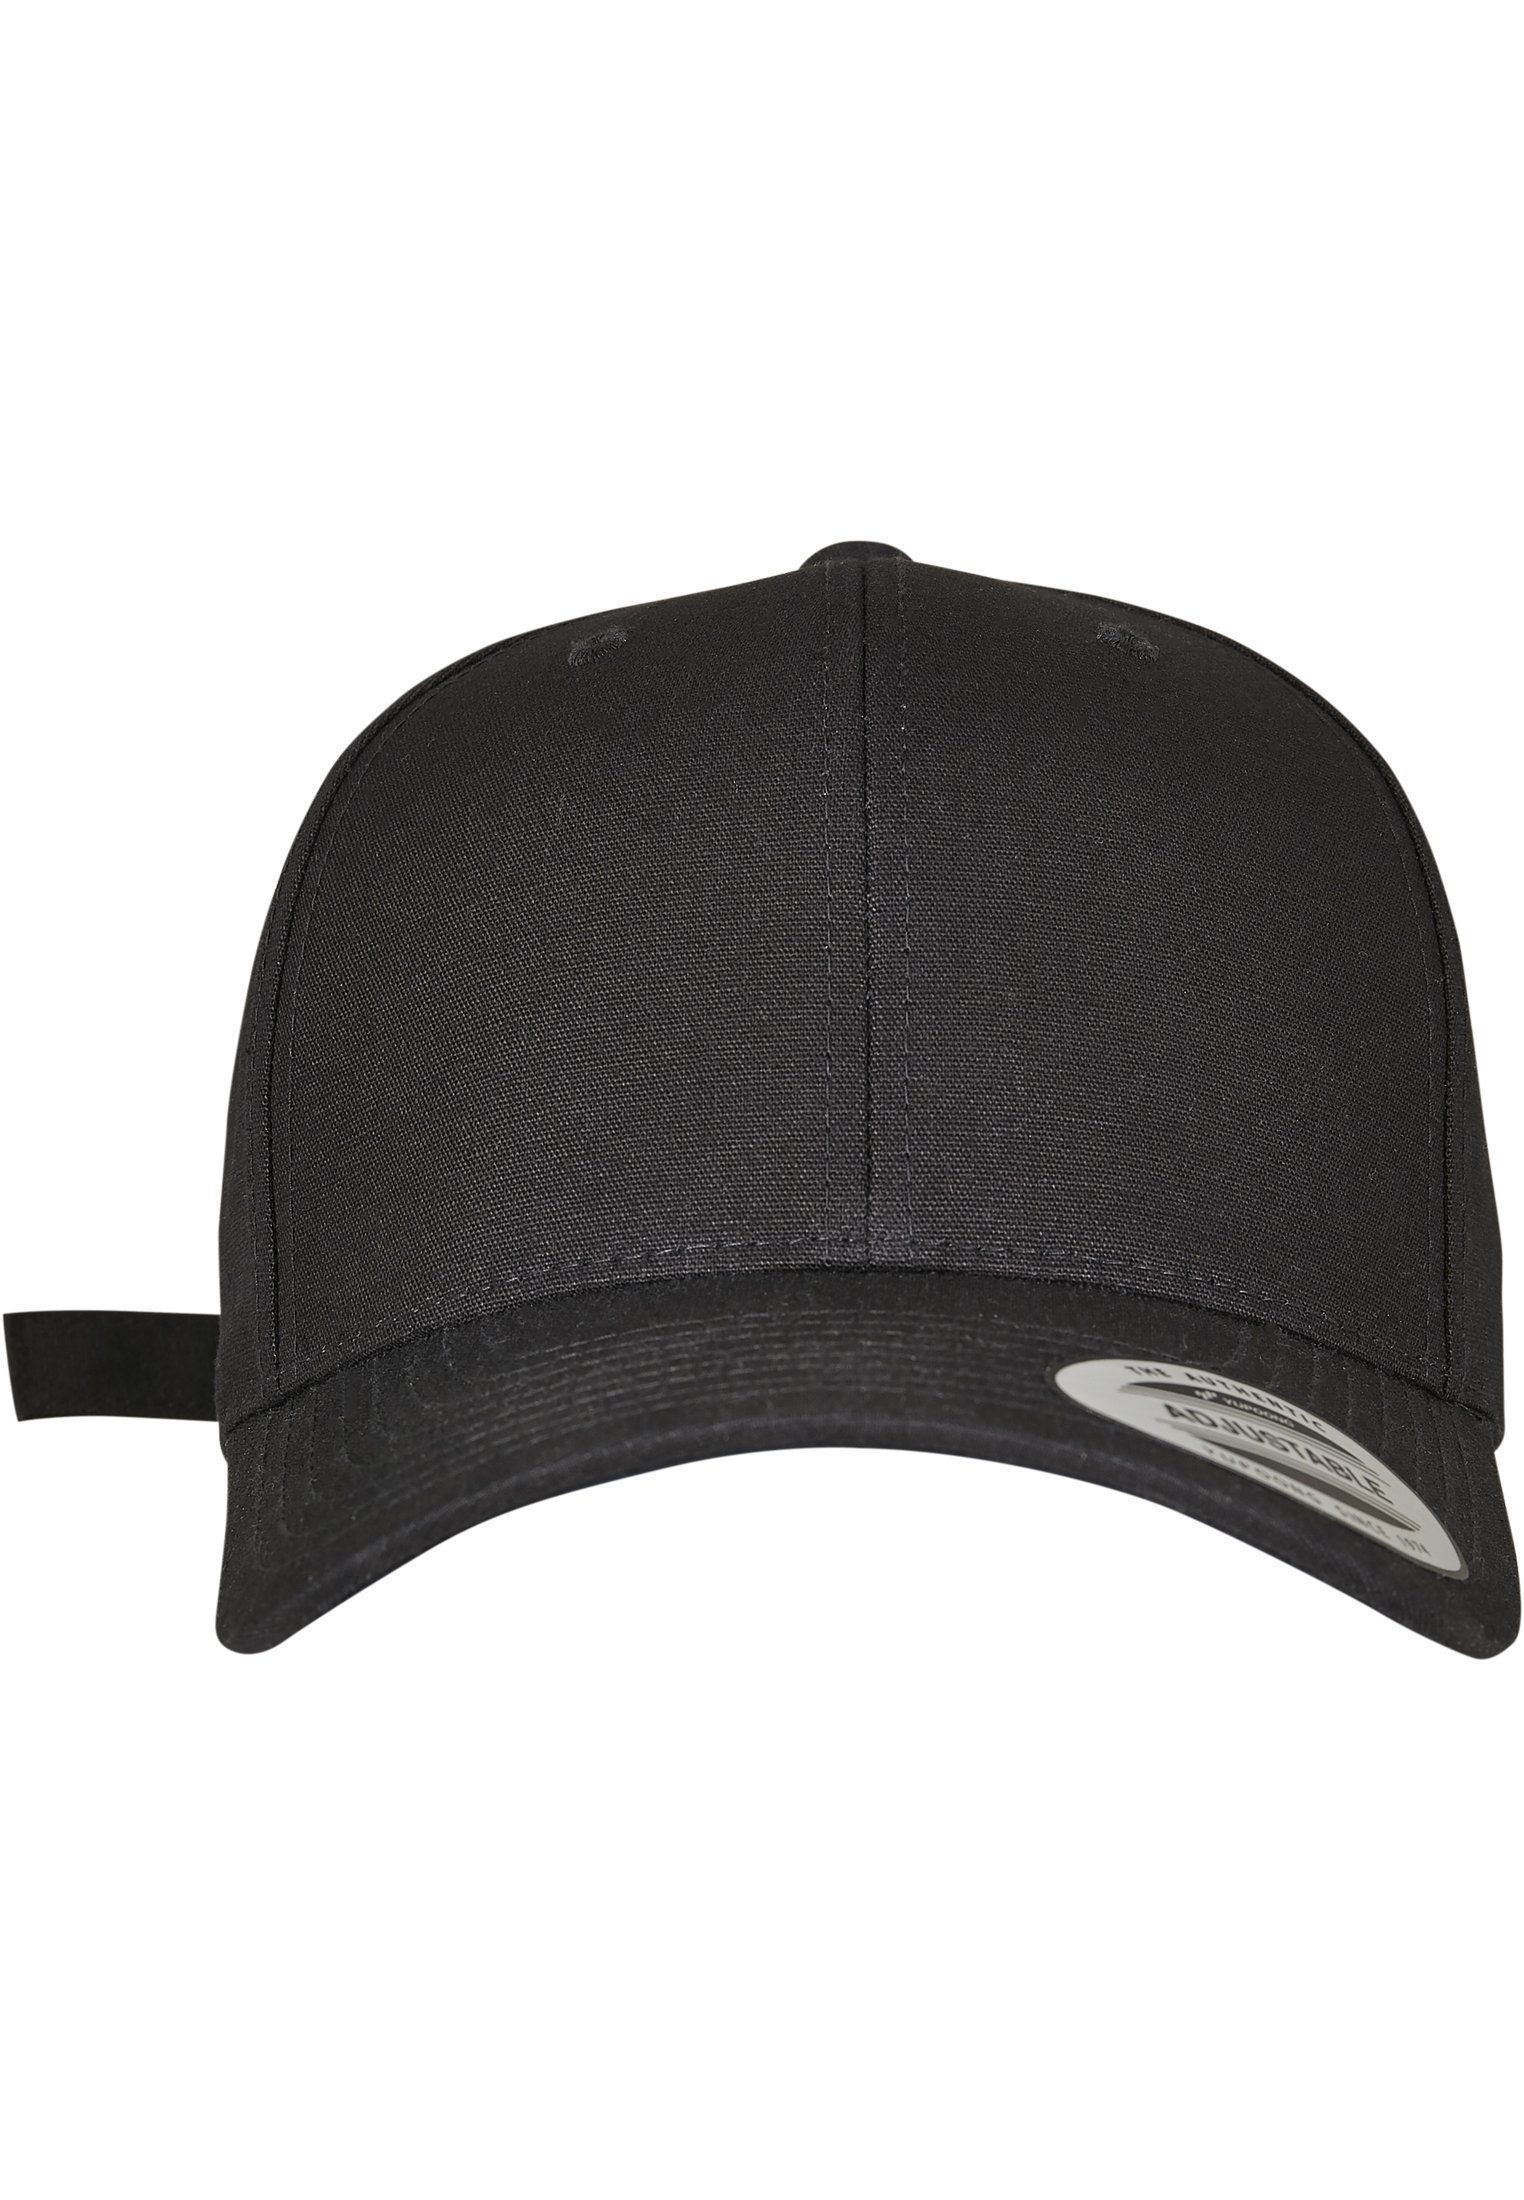 Flexfit Flex Cap Snapback 6-Panel Snap Metal black Curved